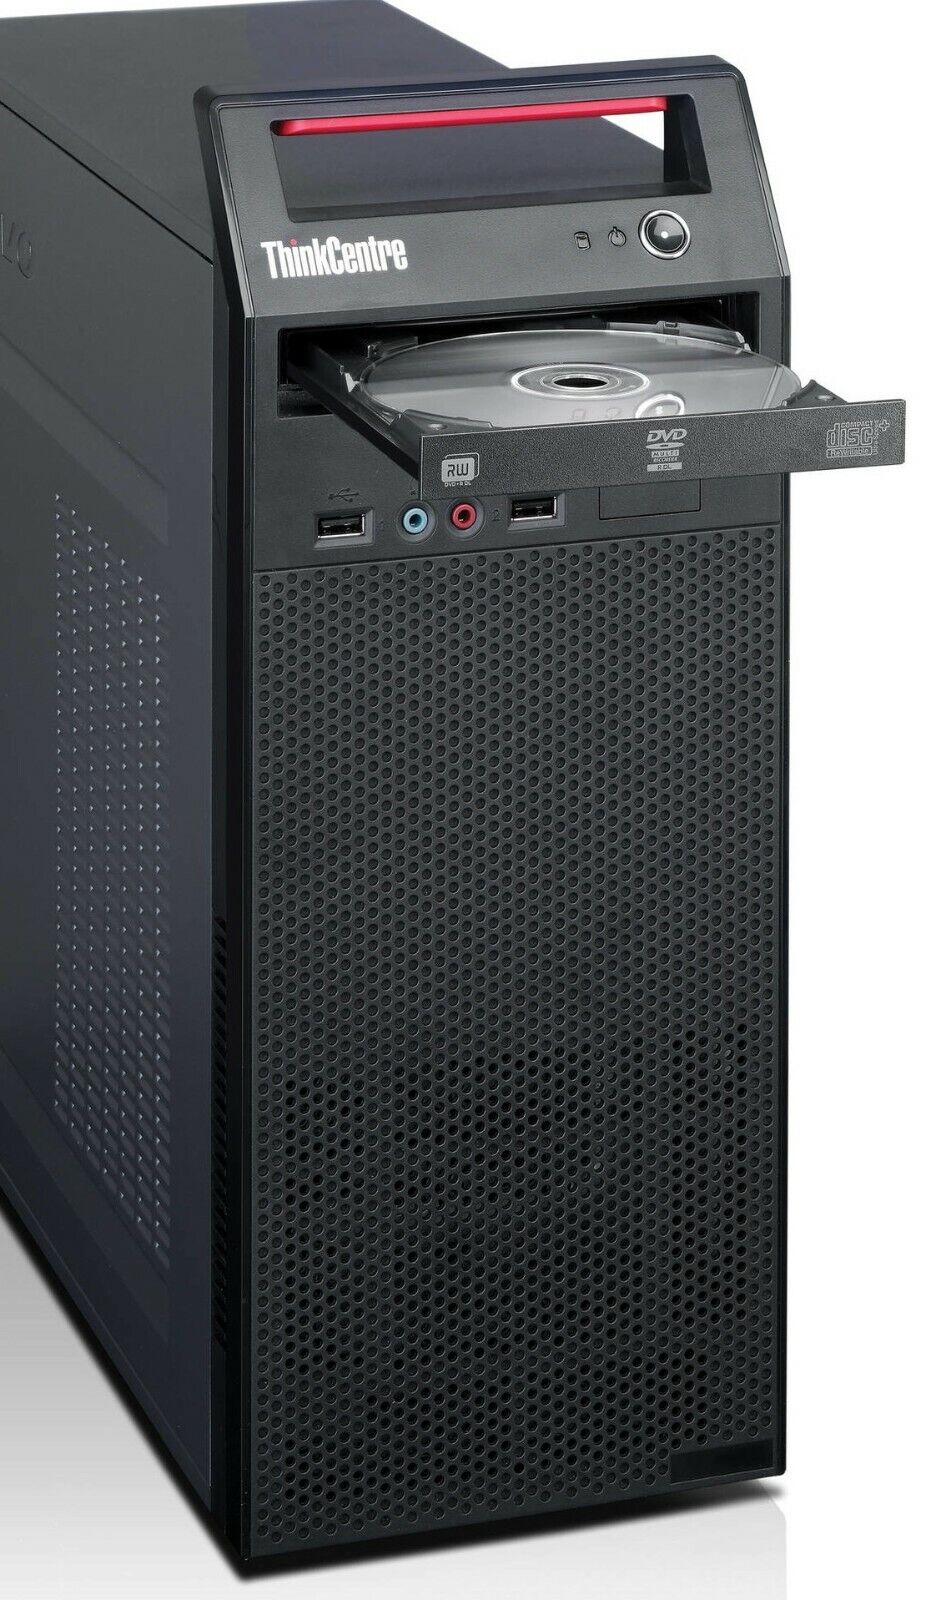 Lenovo Thinkcentre A70 Desktop PC (Intel Core 2 Duo E7500, RAM 4GB, HDD 250GB, DVD+-RW DL, Window 10